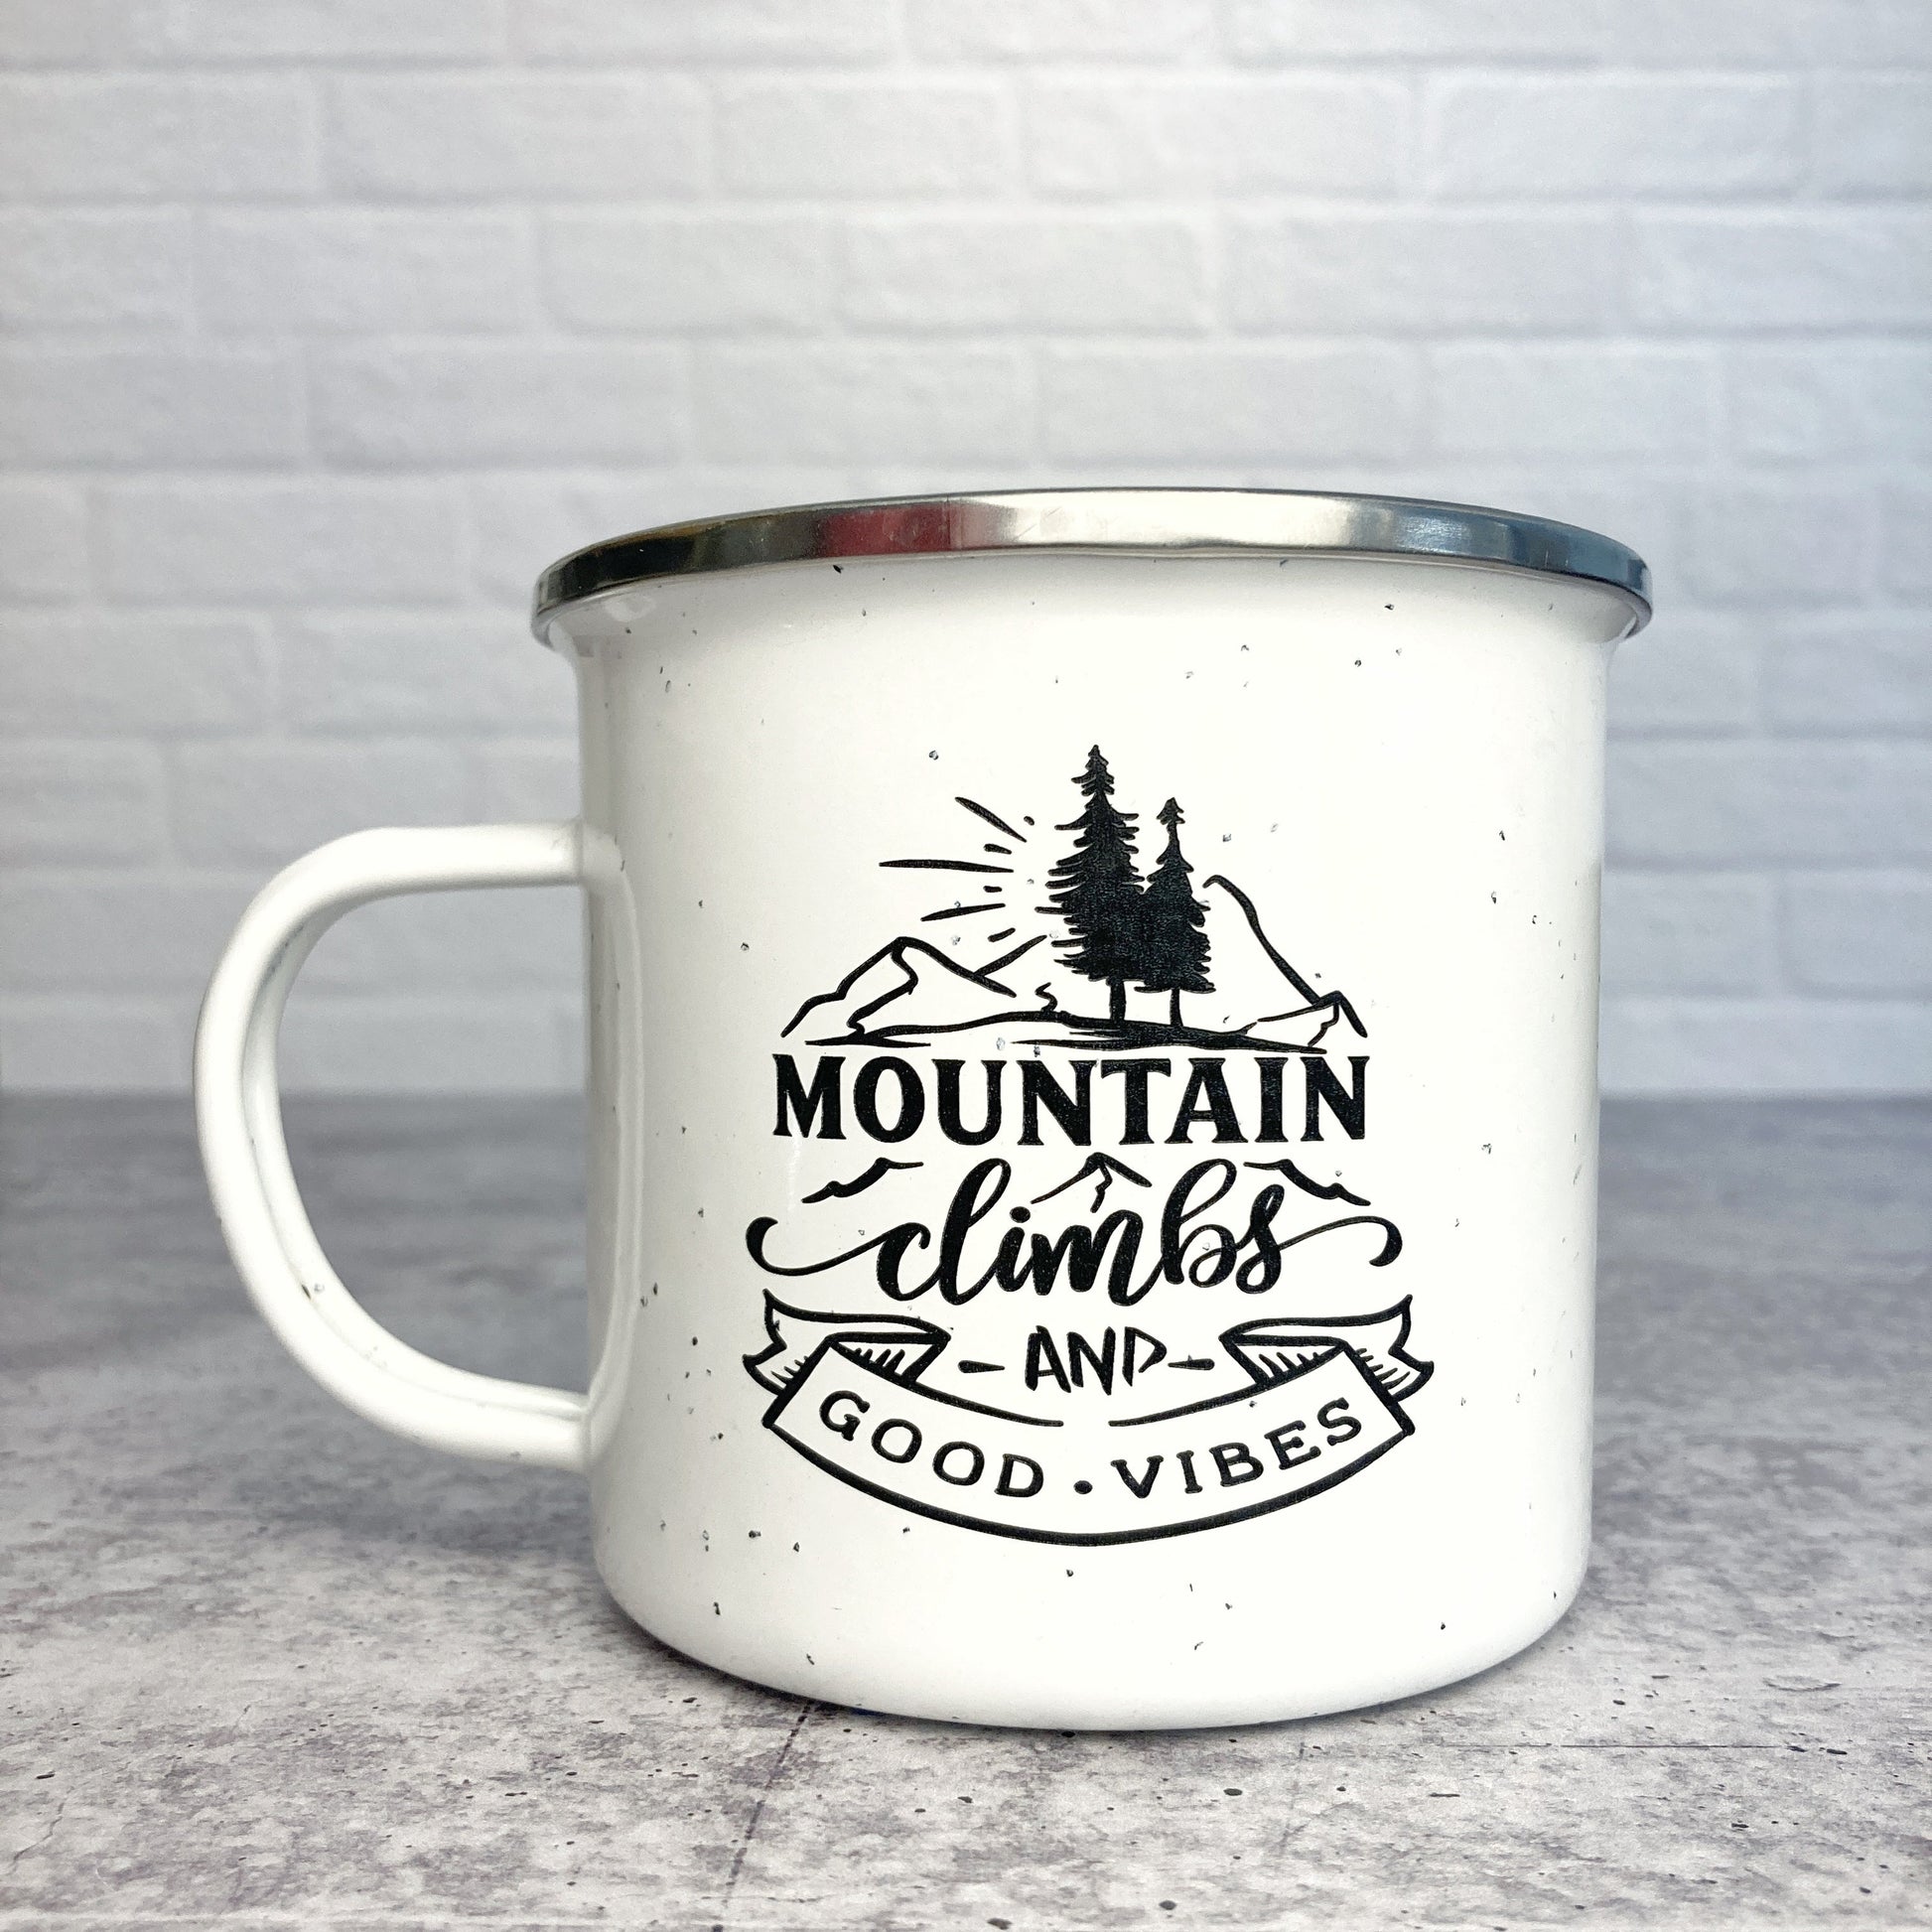 Mountain Climbs and Good Vibes design on a white enamel mug